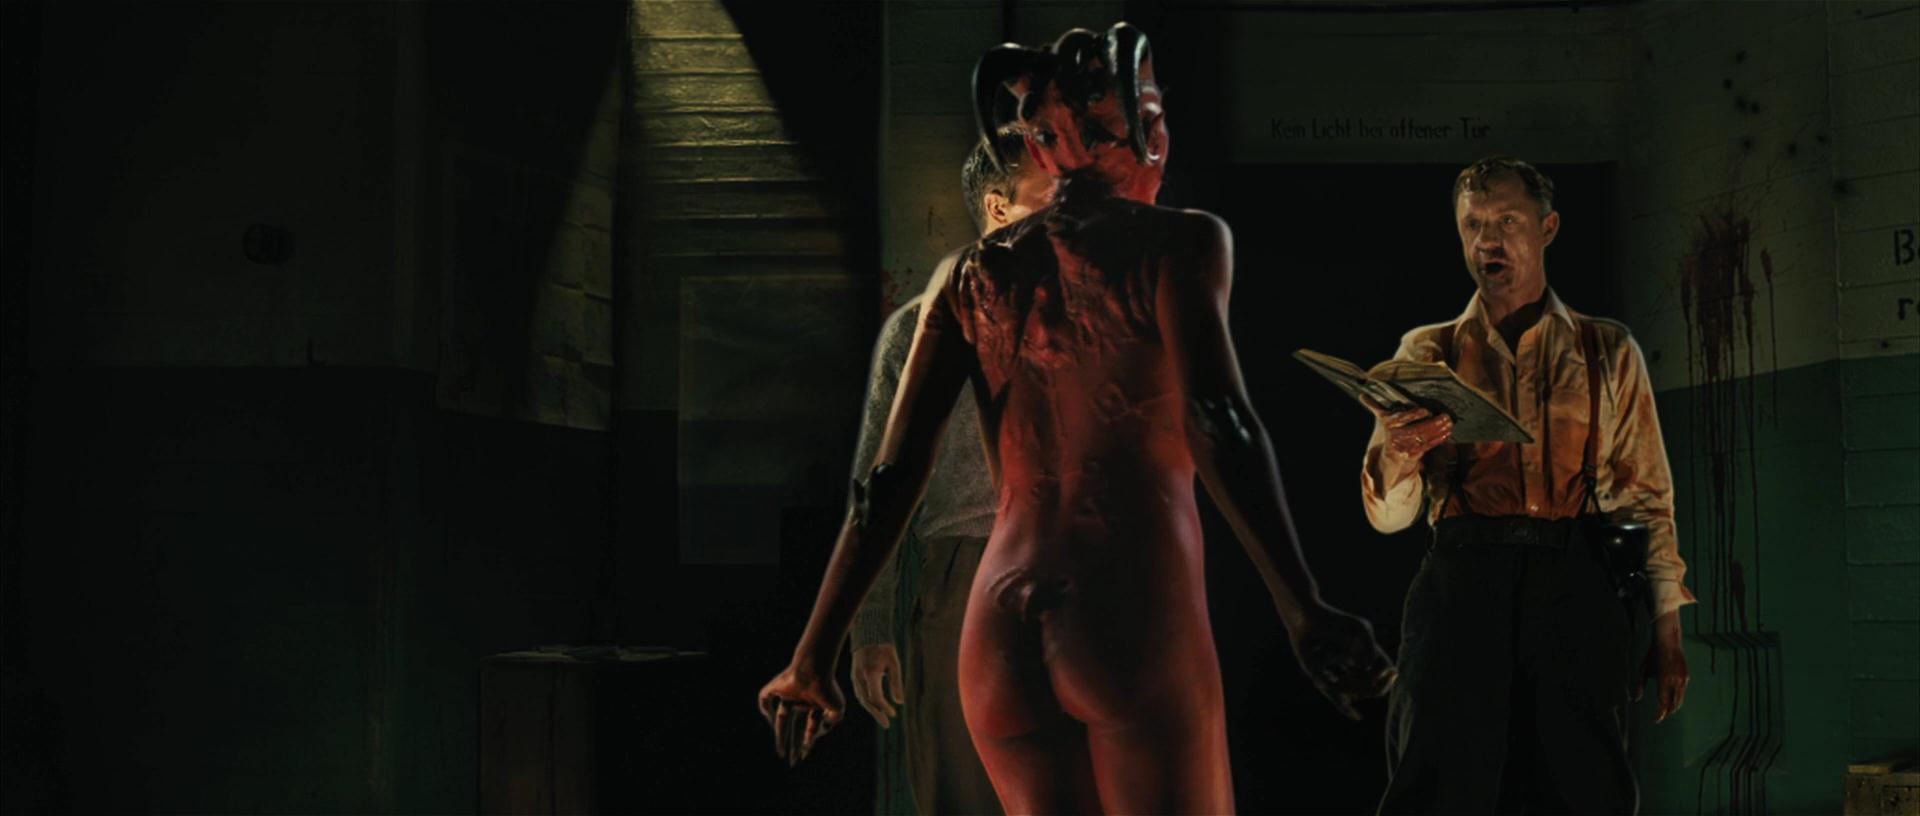 Gina Varela nude pics.